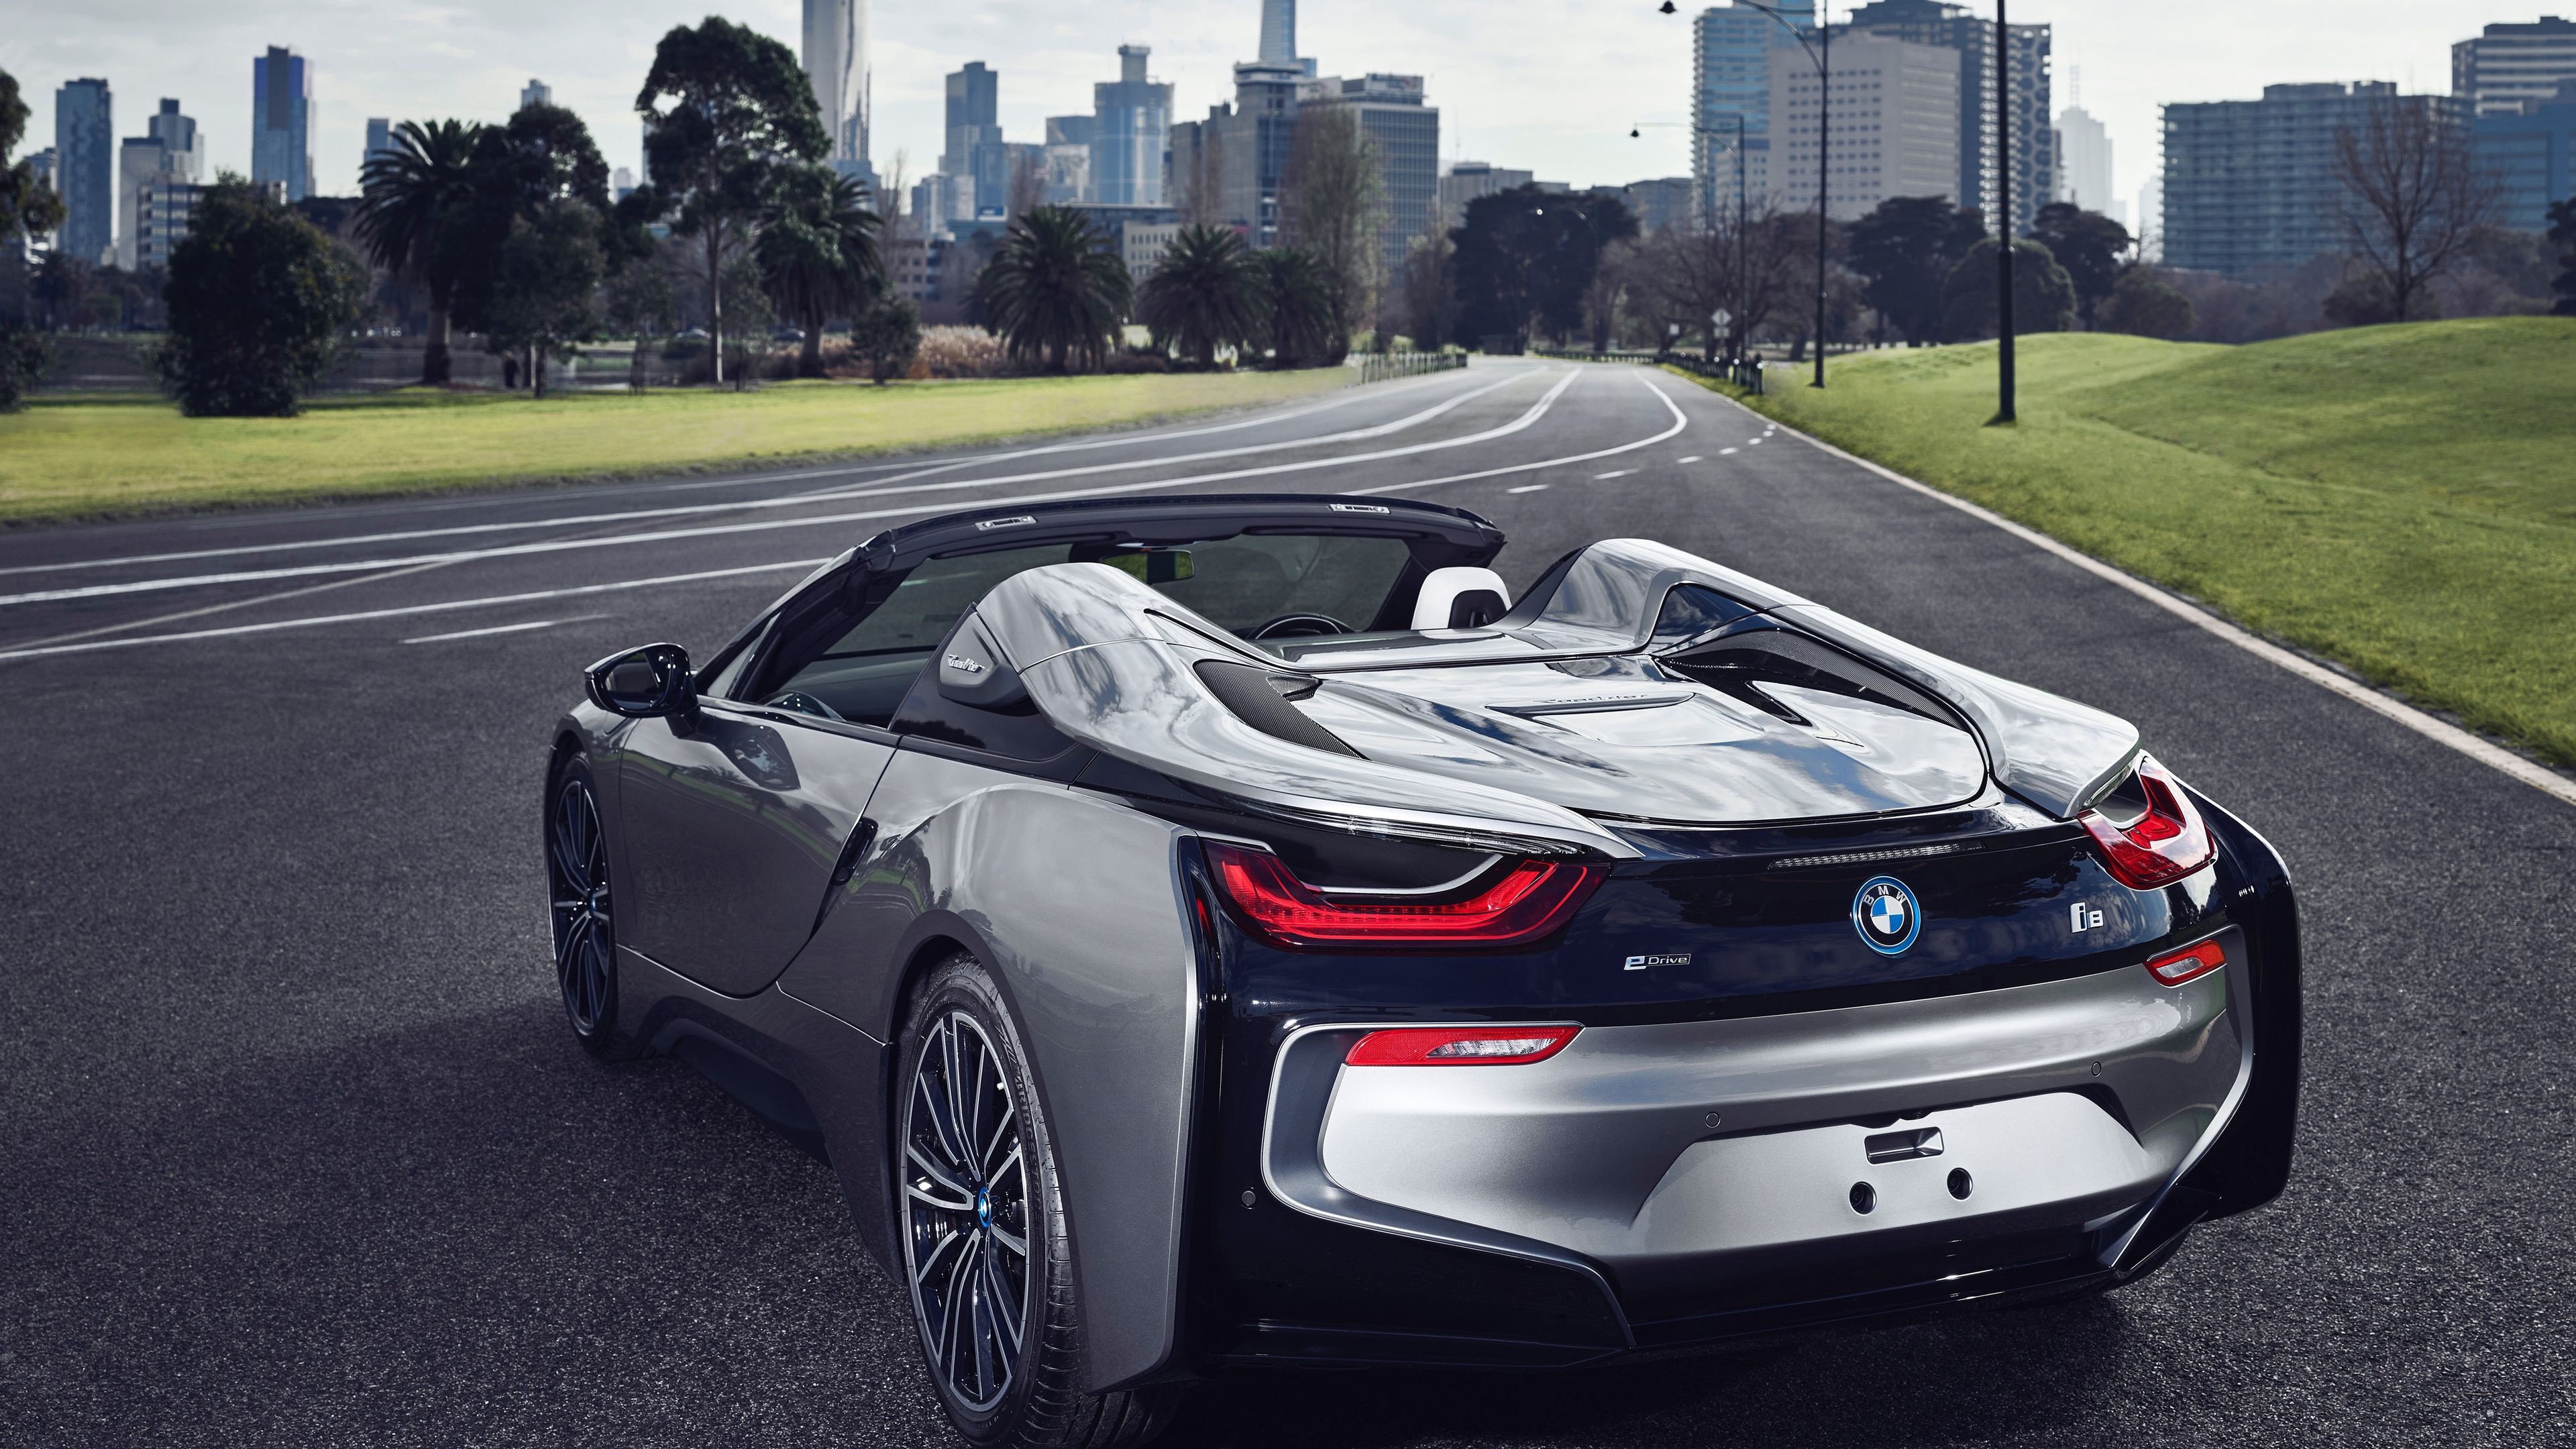 BMW i8 Roadster 2018, Rear view wallpaper, Open-top experience, Thrilling driving dynamics, Convertible beauty, 3840x2160 4K Desktop